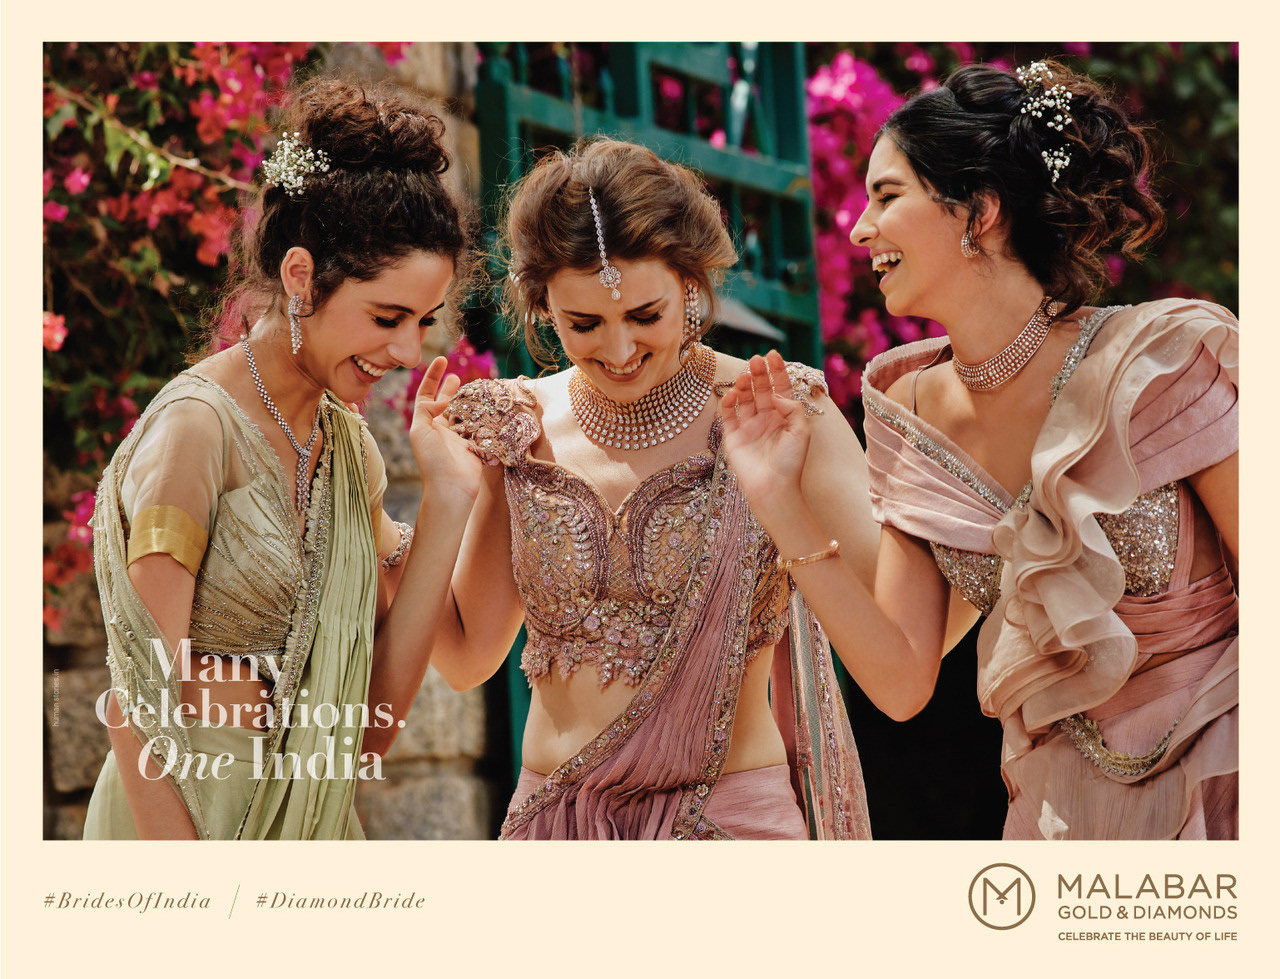 TarunnPhotographer - Campaigns: Malabar Gold & Diamonds - Diamond Collection